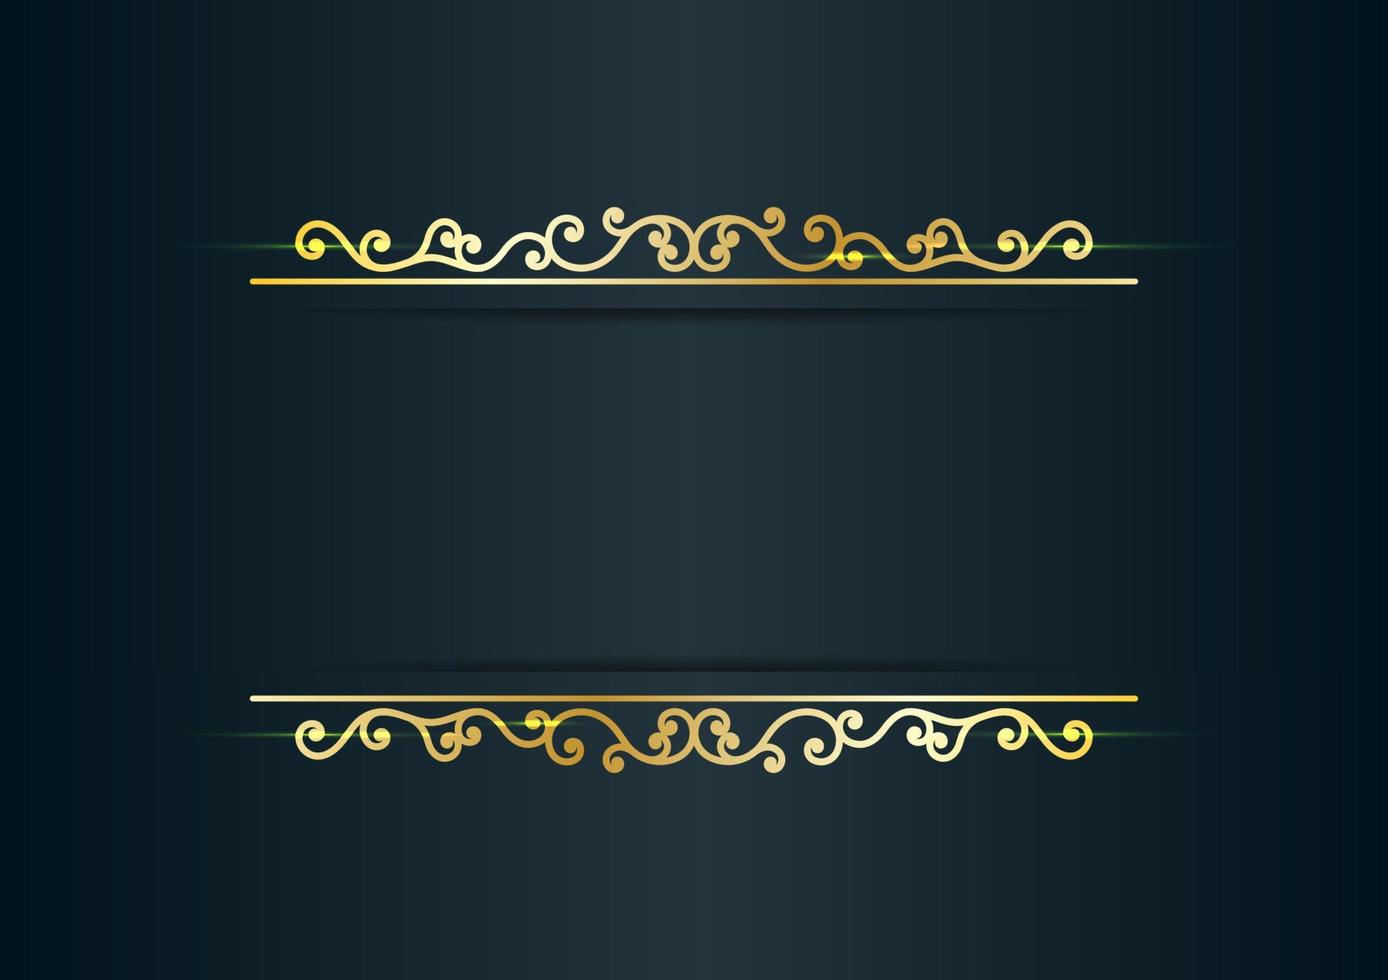 Artistic floral ornamental golden design illustration background for a gift, card and invitation vector